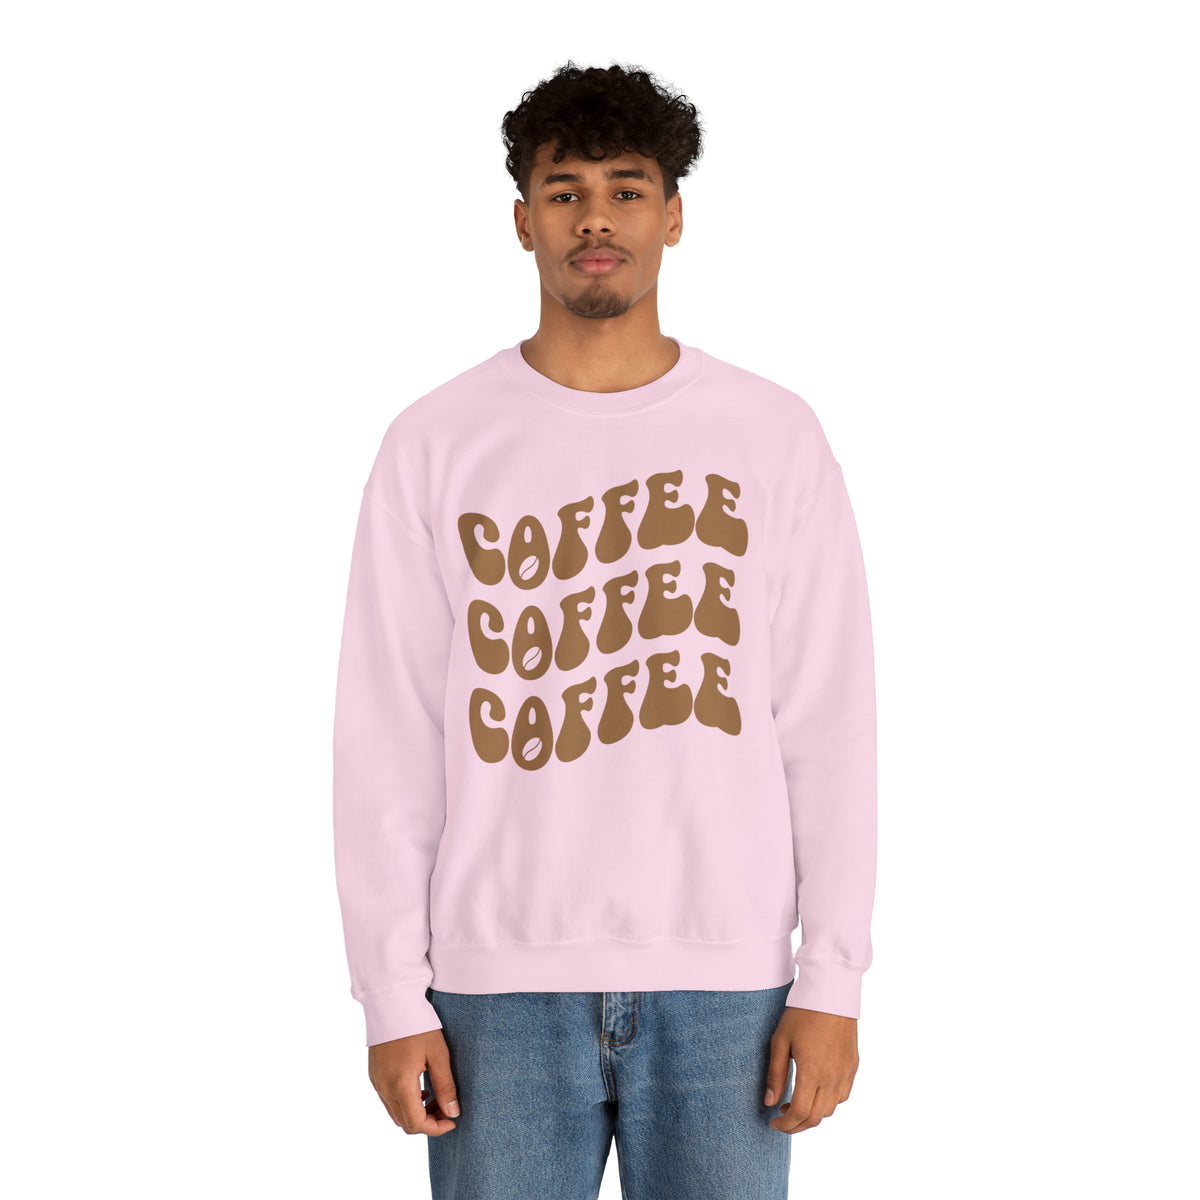 Coffee Sweatshirt, Coffee Lovers, Cute Coffee Sweatshirt, Trendy, Sweatshirts, Cute Sweatshirt, Oversized Fit